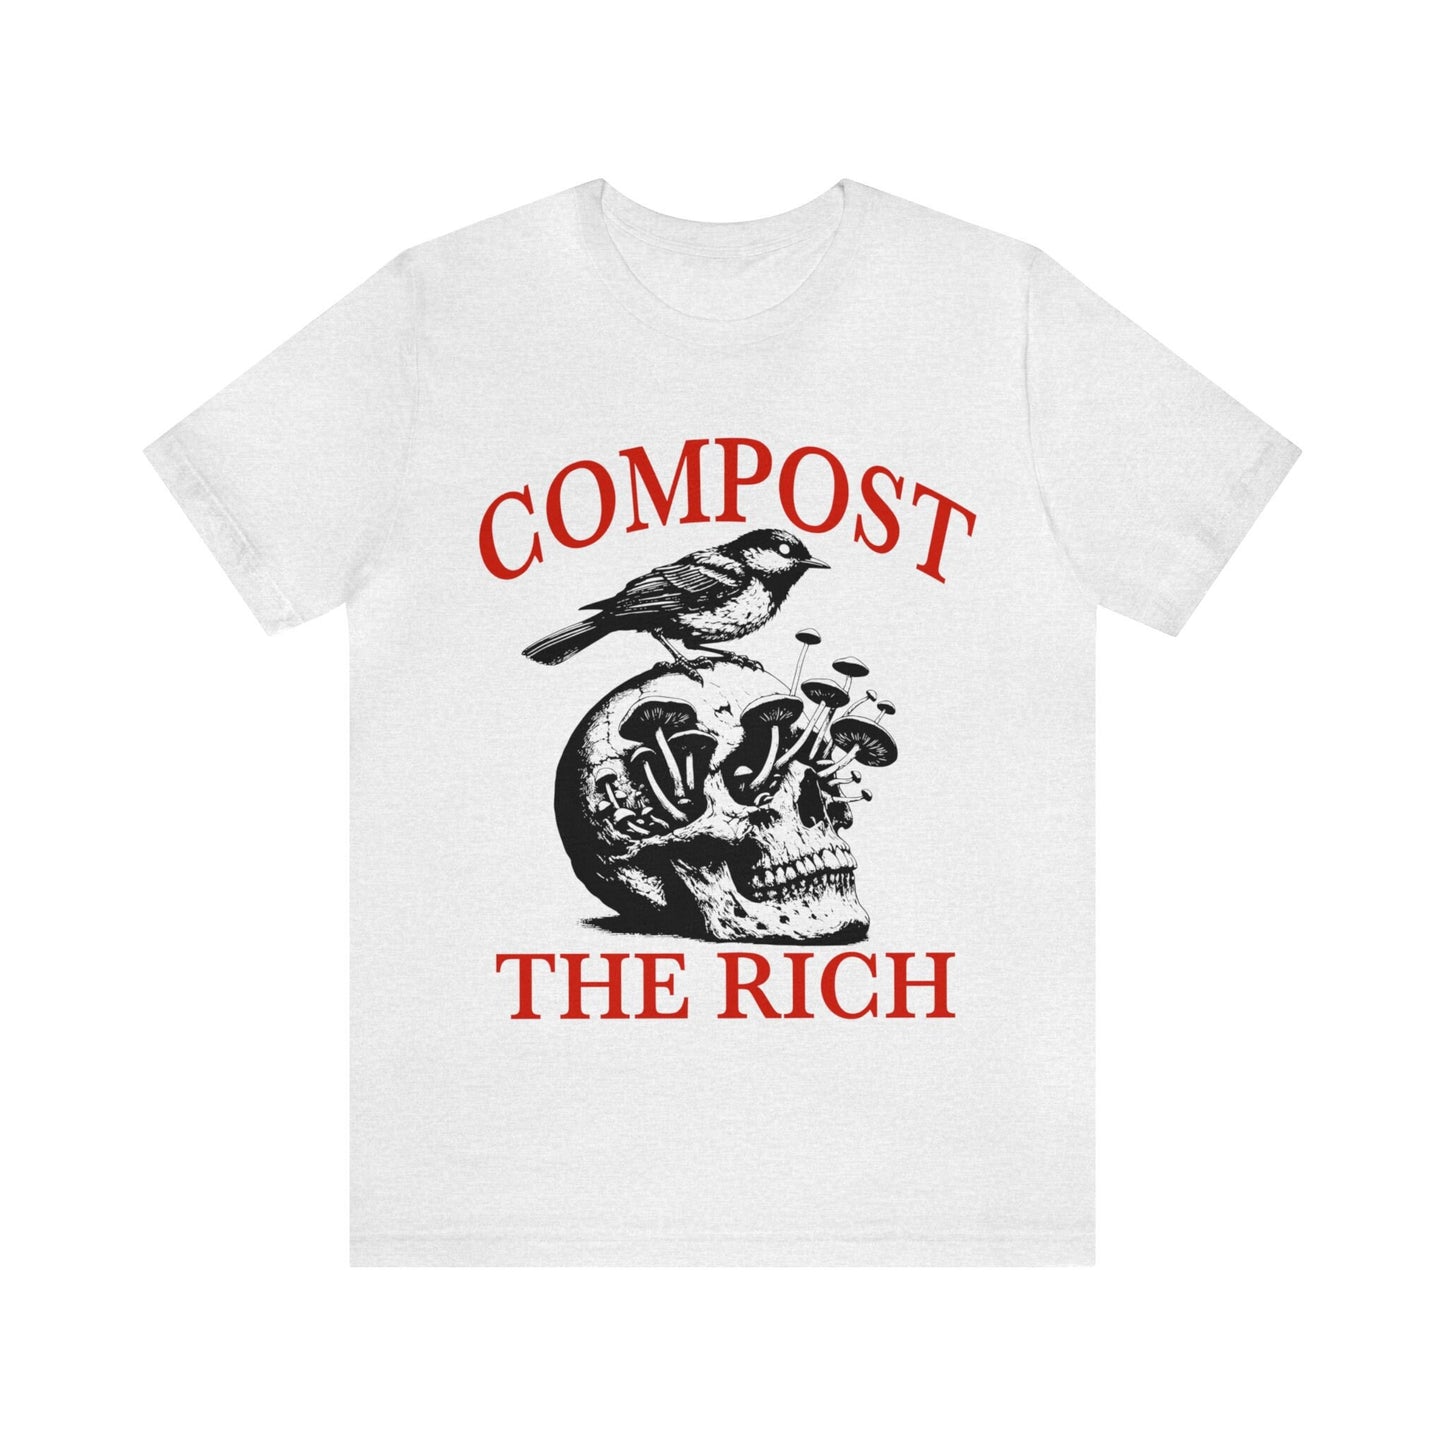 Compost the rich shirt